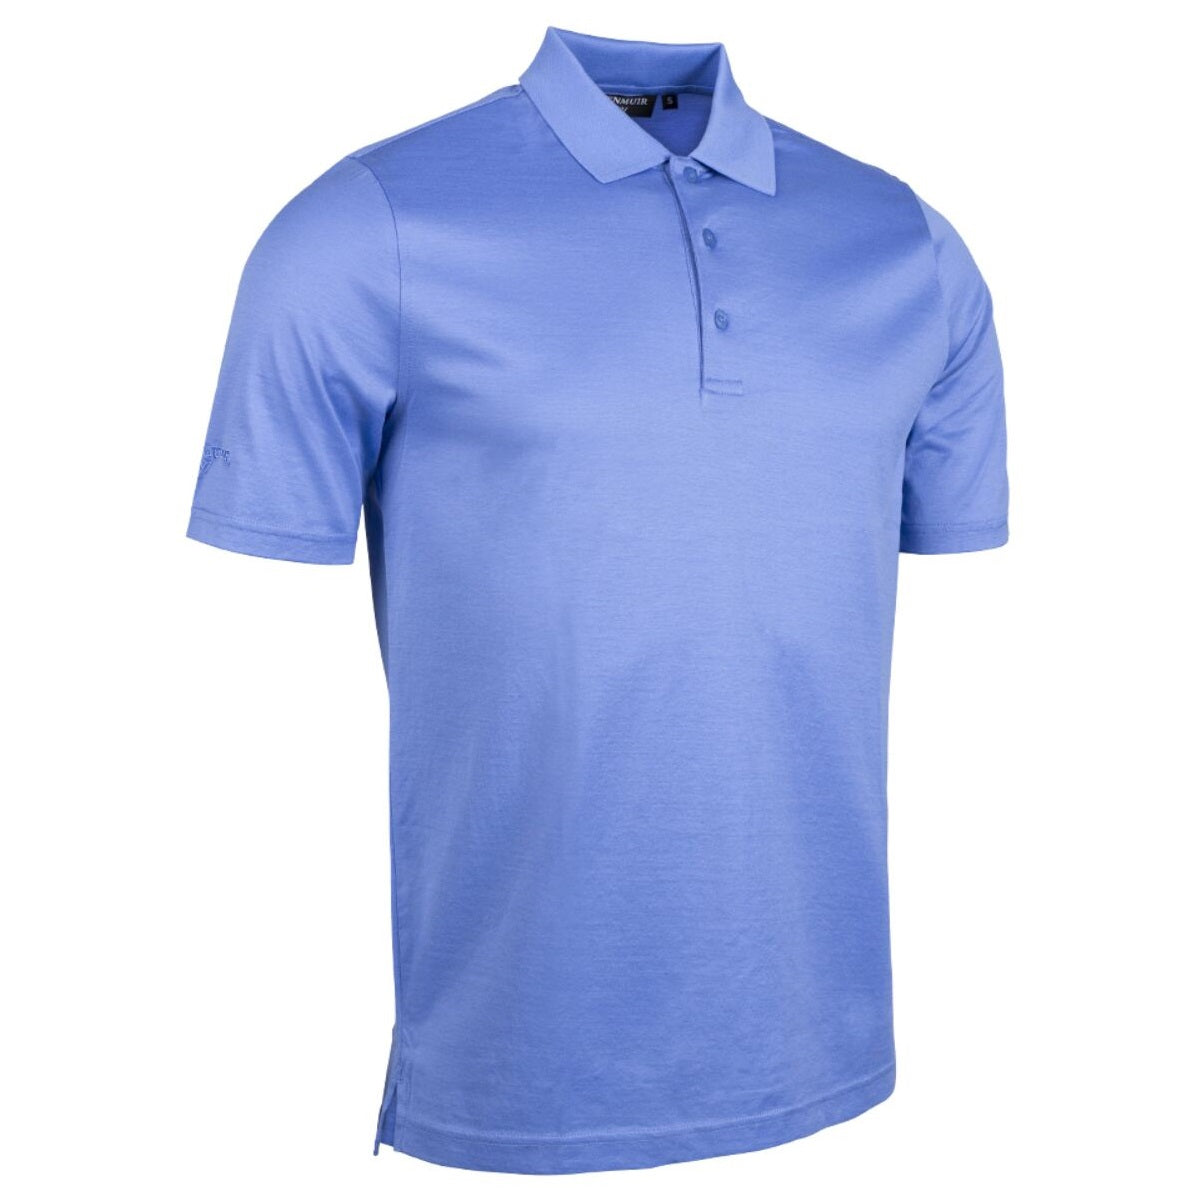 GLENMUIR Tarth Mercerised Cotton Polo Shirt - Mens - Light Blue